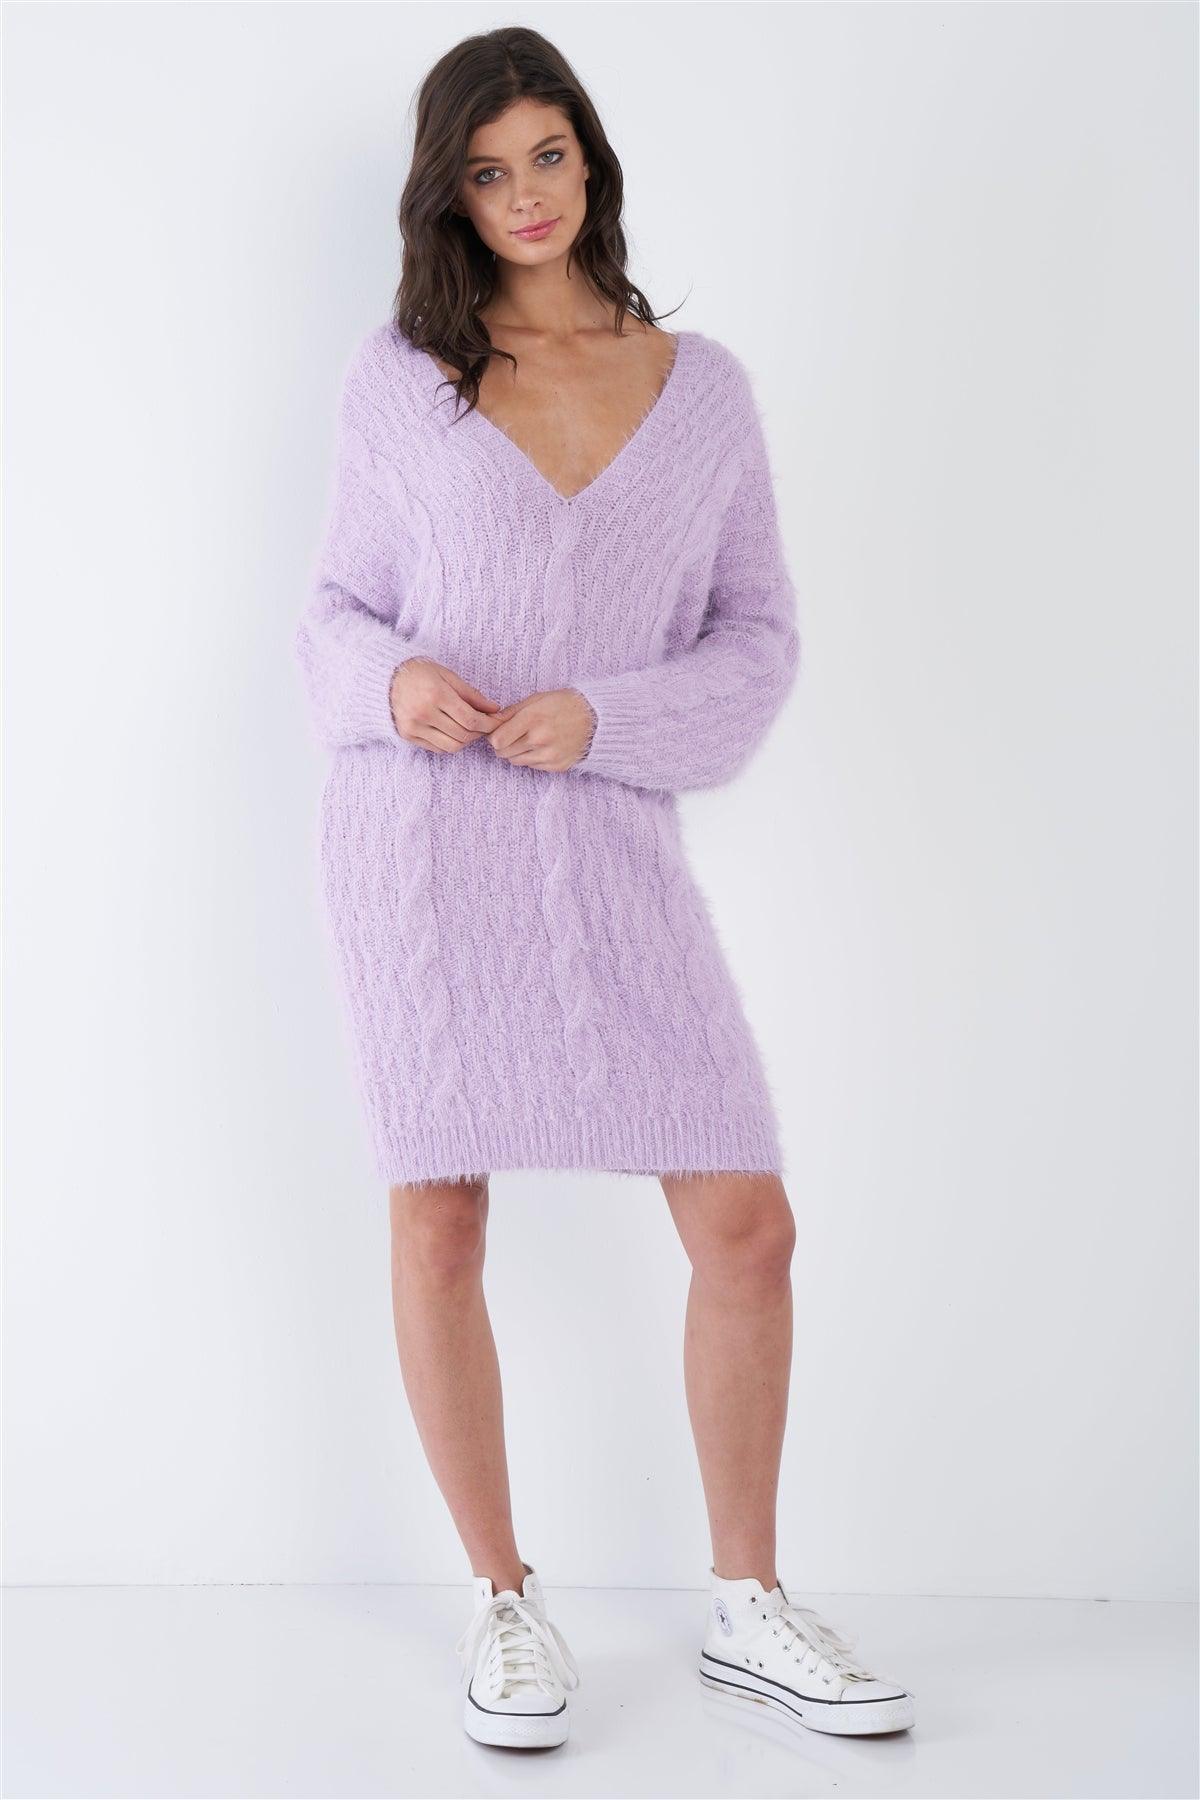 Purple Fuzzy Sweater Dress /4-2-1